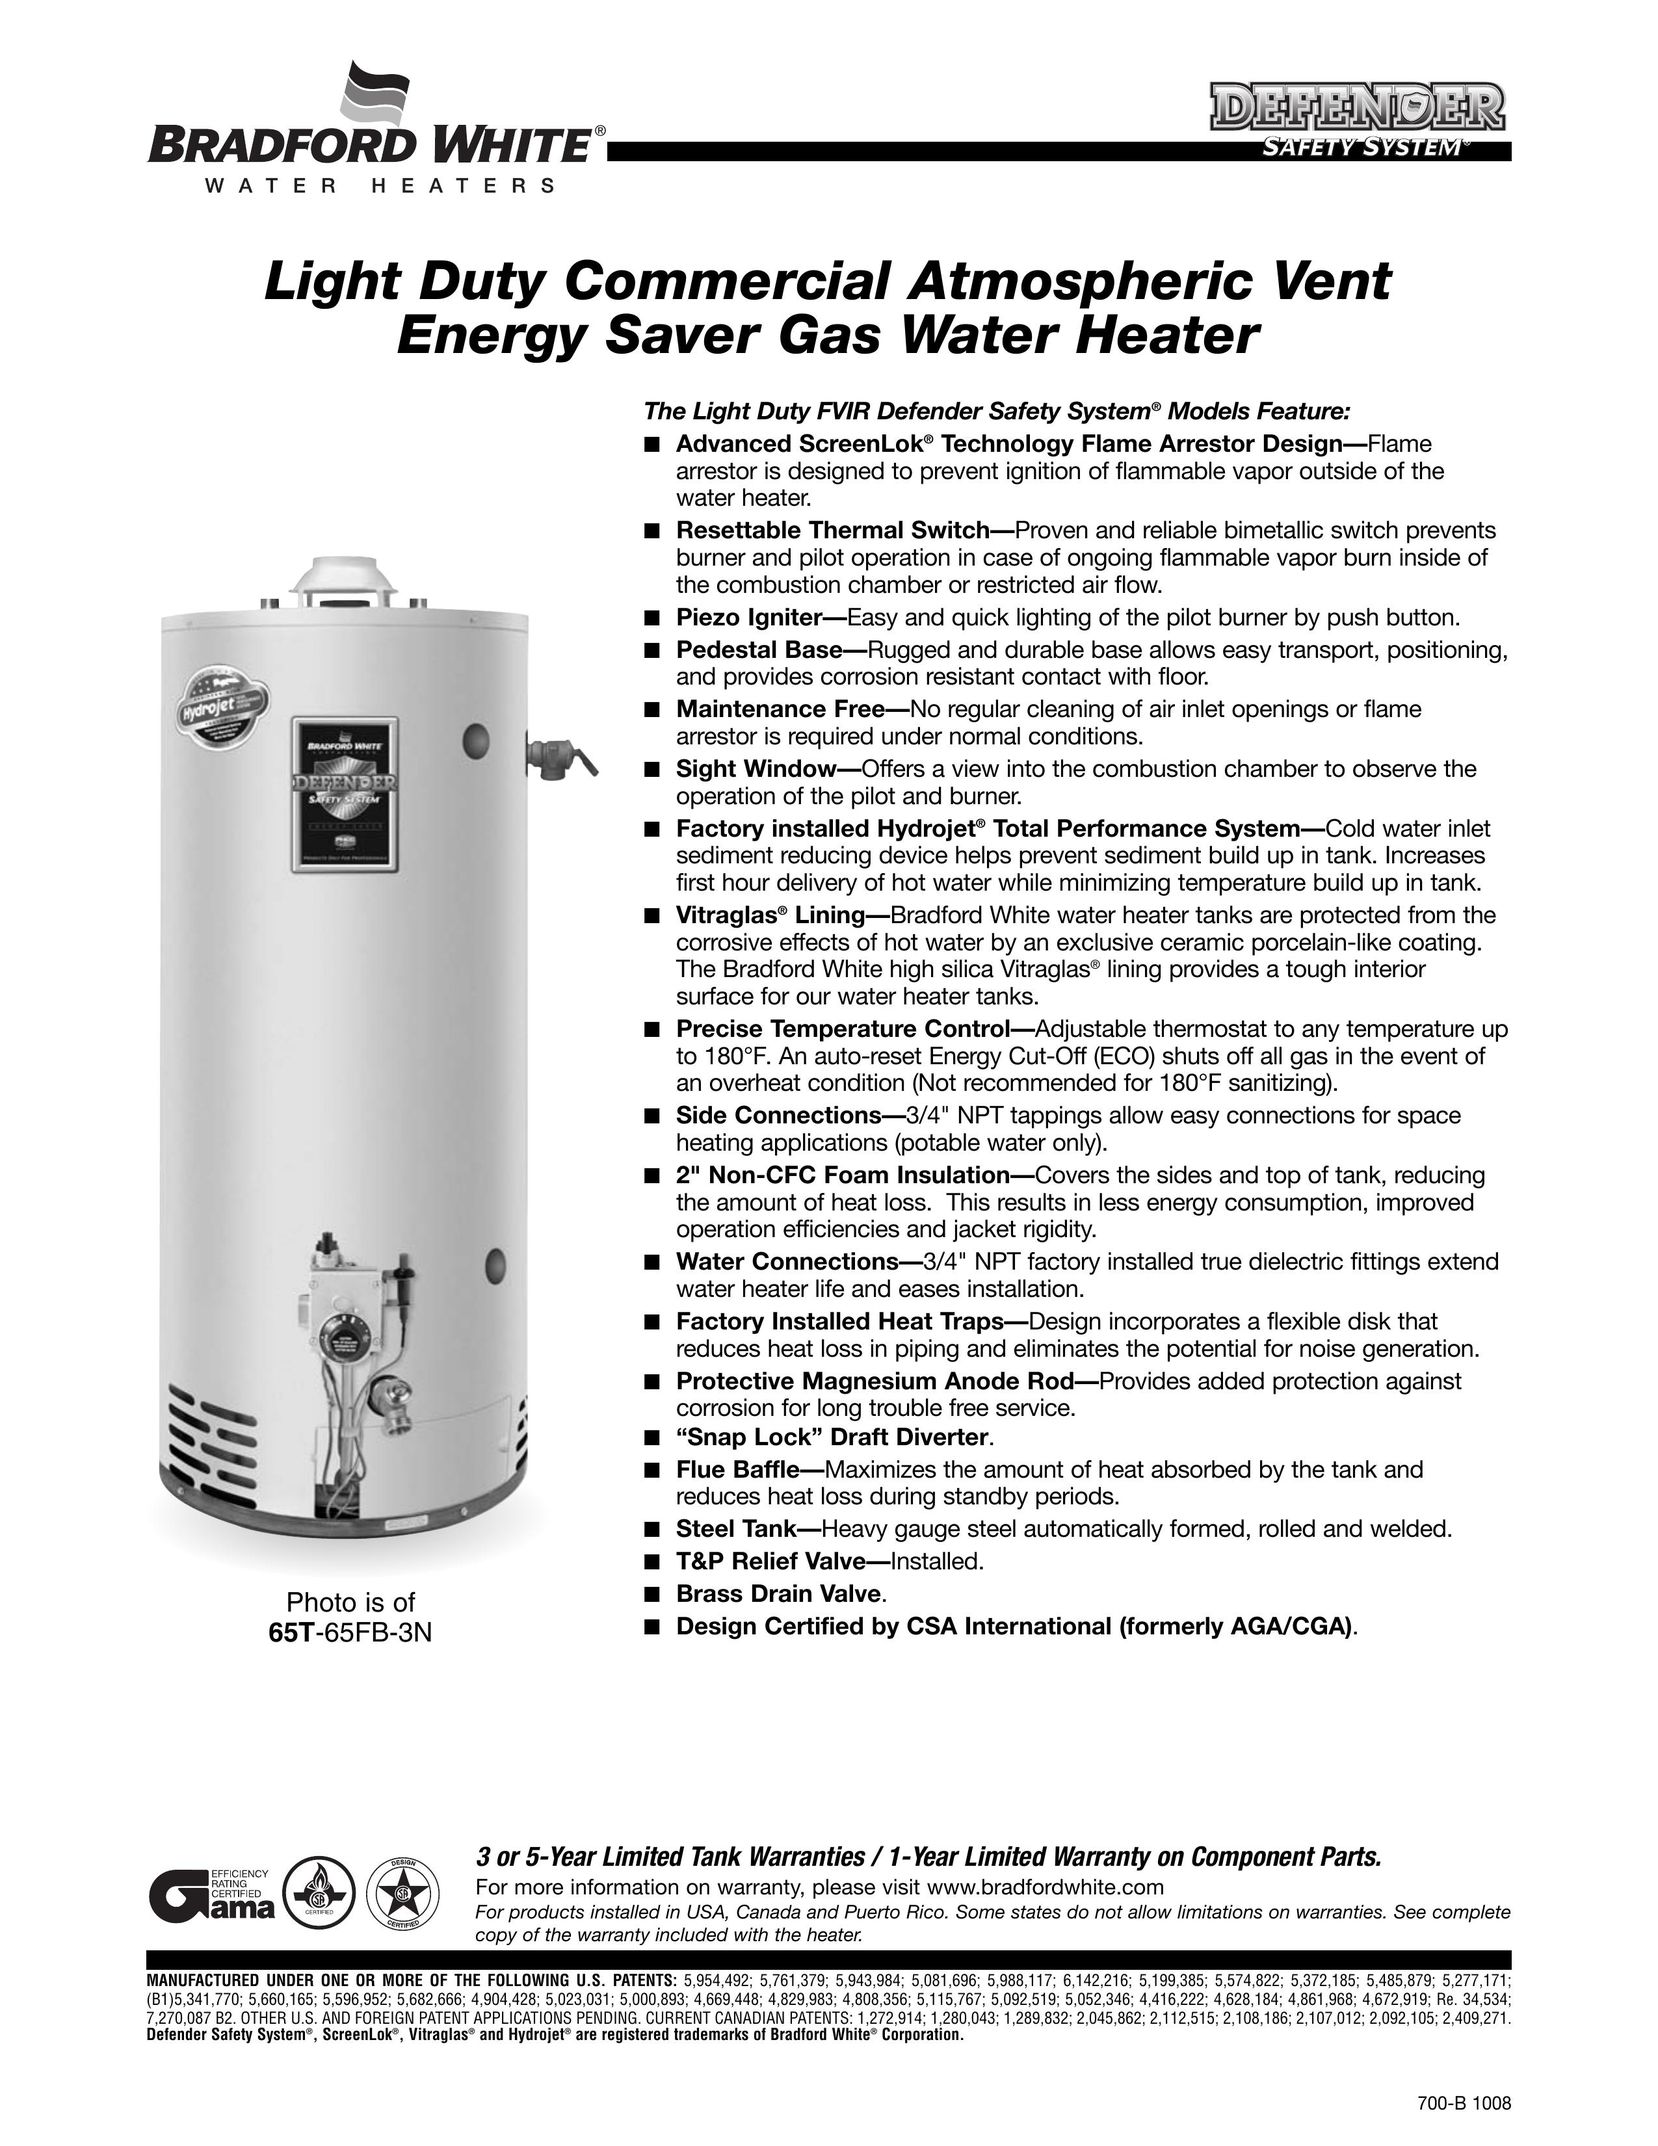 Bradford-White Corp 65T-65FB-3N Water Heater User Manual